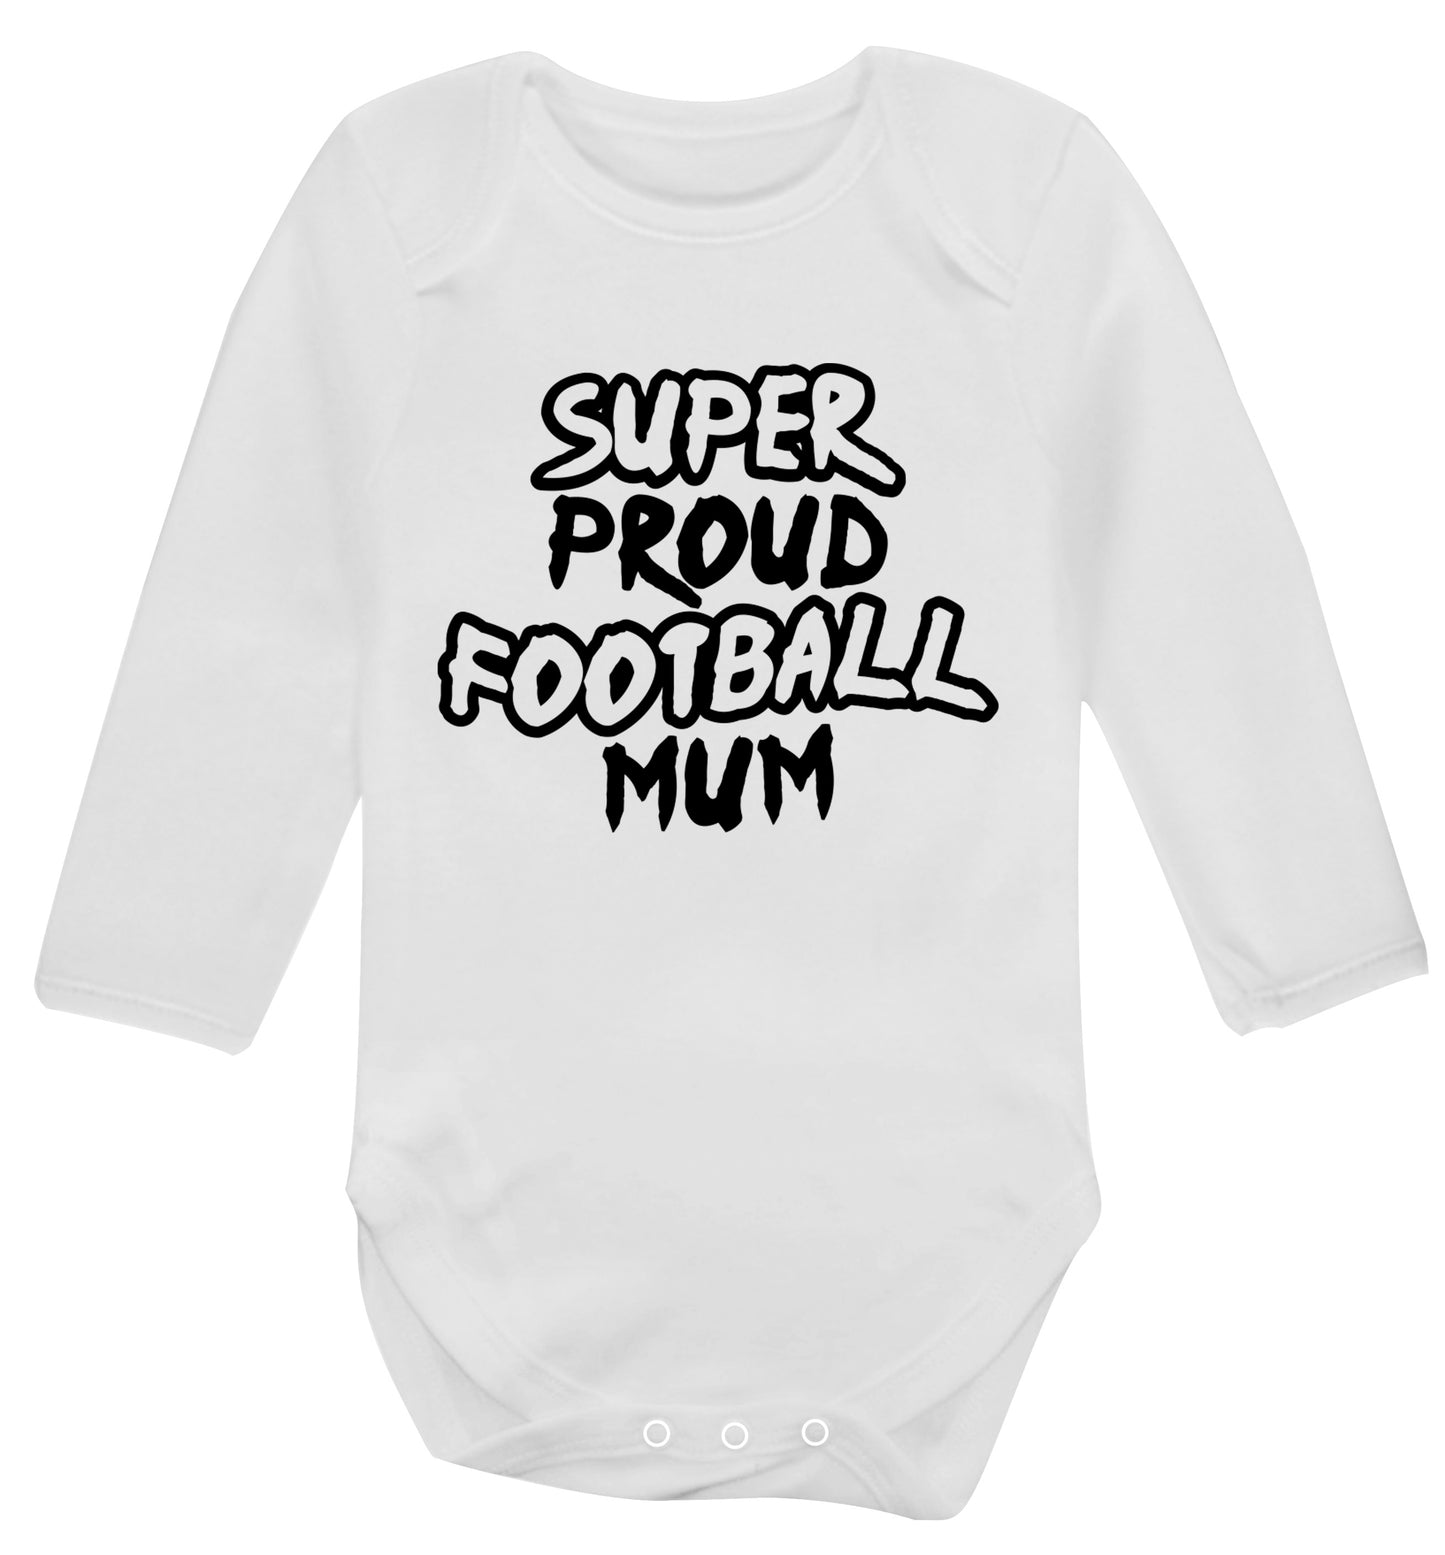 Super proud football mum Baby Vest long sleeved white 6-12 months